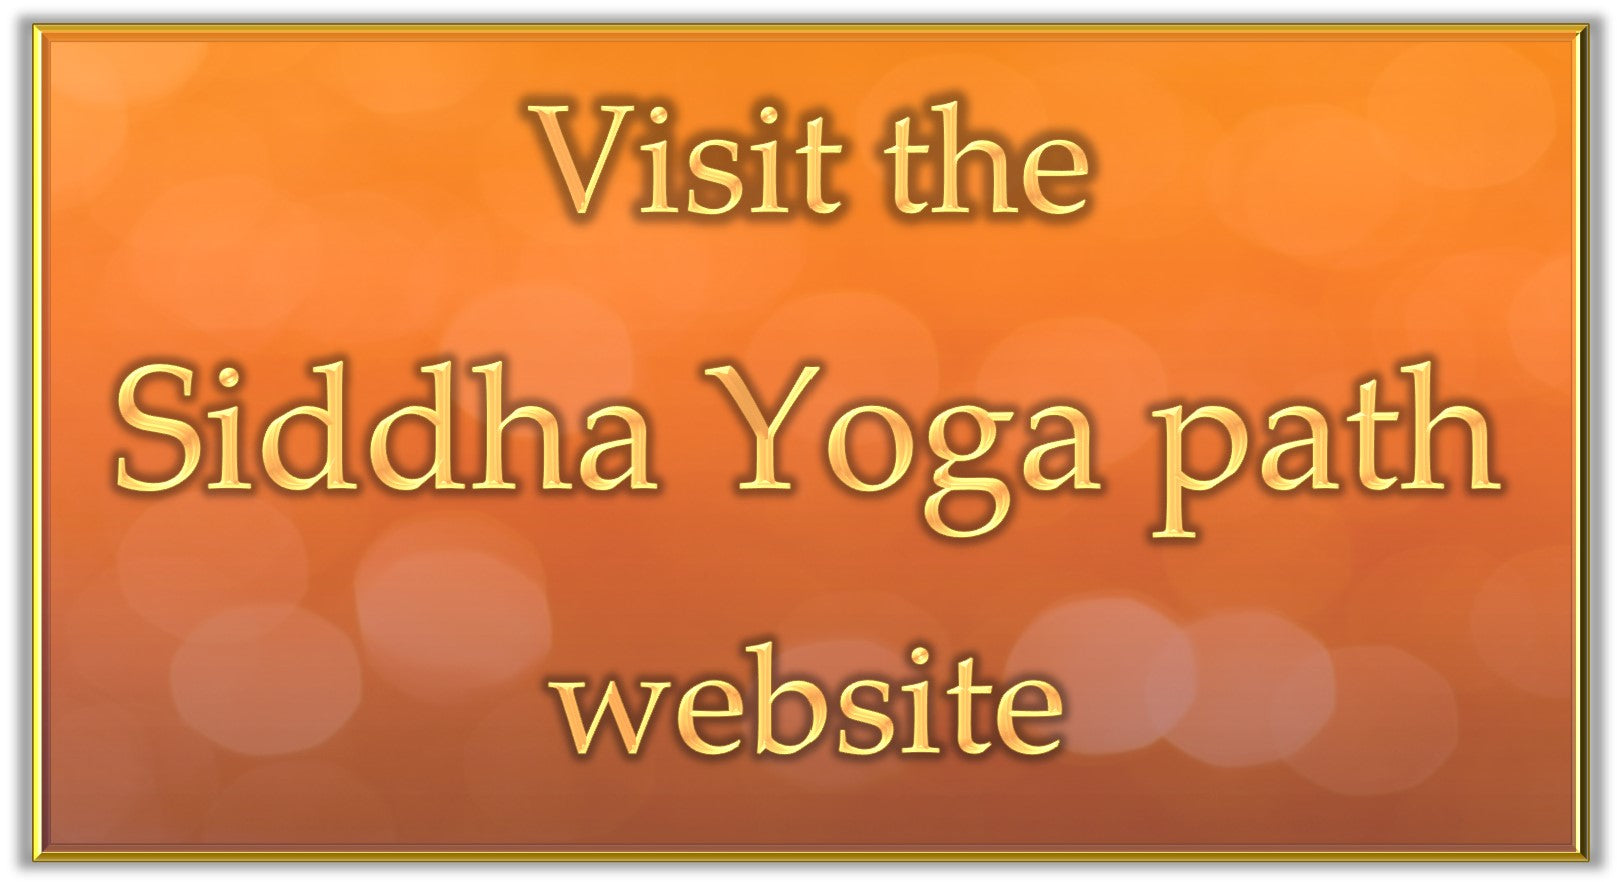 Visit the Siddha Yoga path website